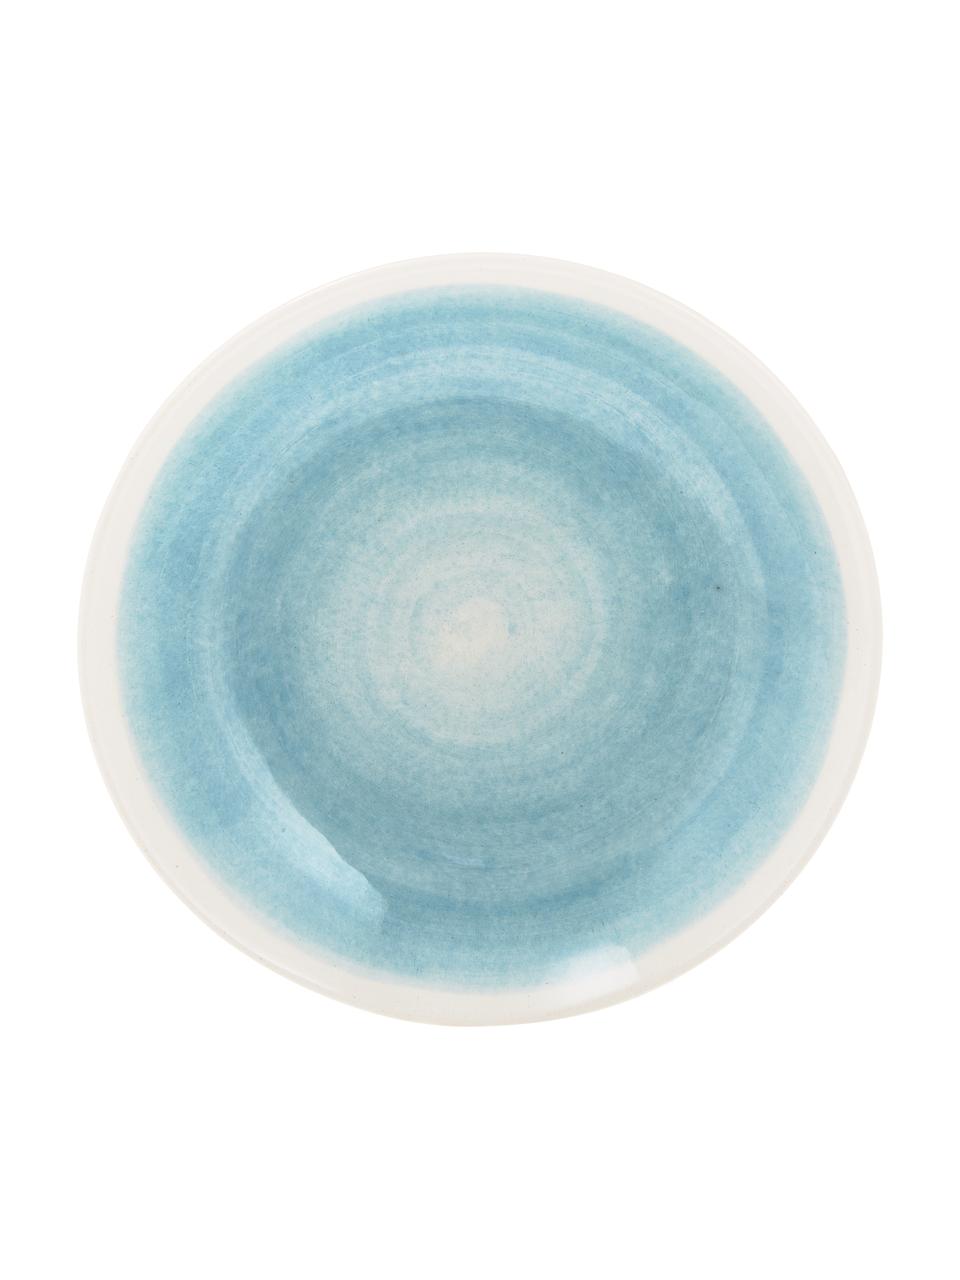 Platos hondos artesanales Pure, 6 uds., Cerámica, Azul, blanco, Ø 23 cm